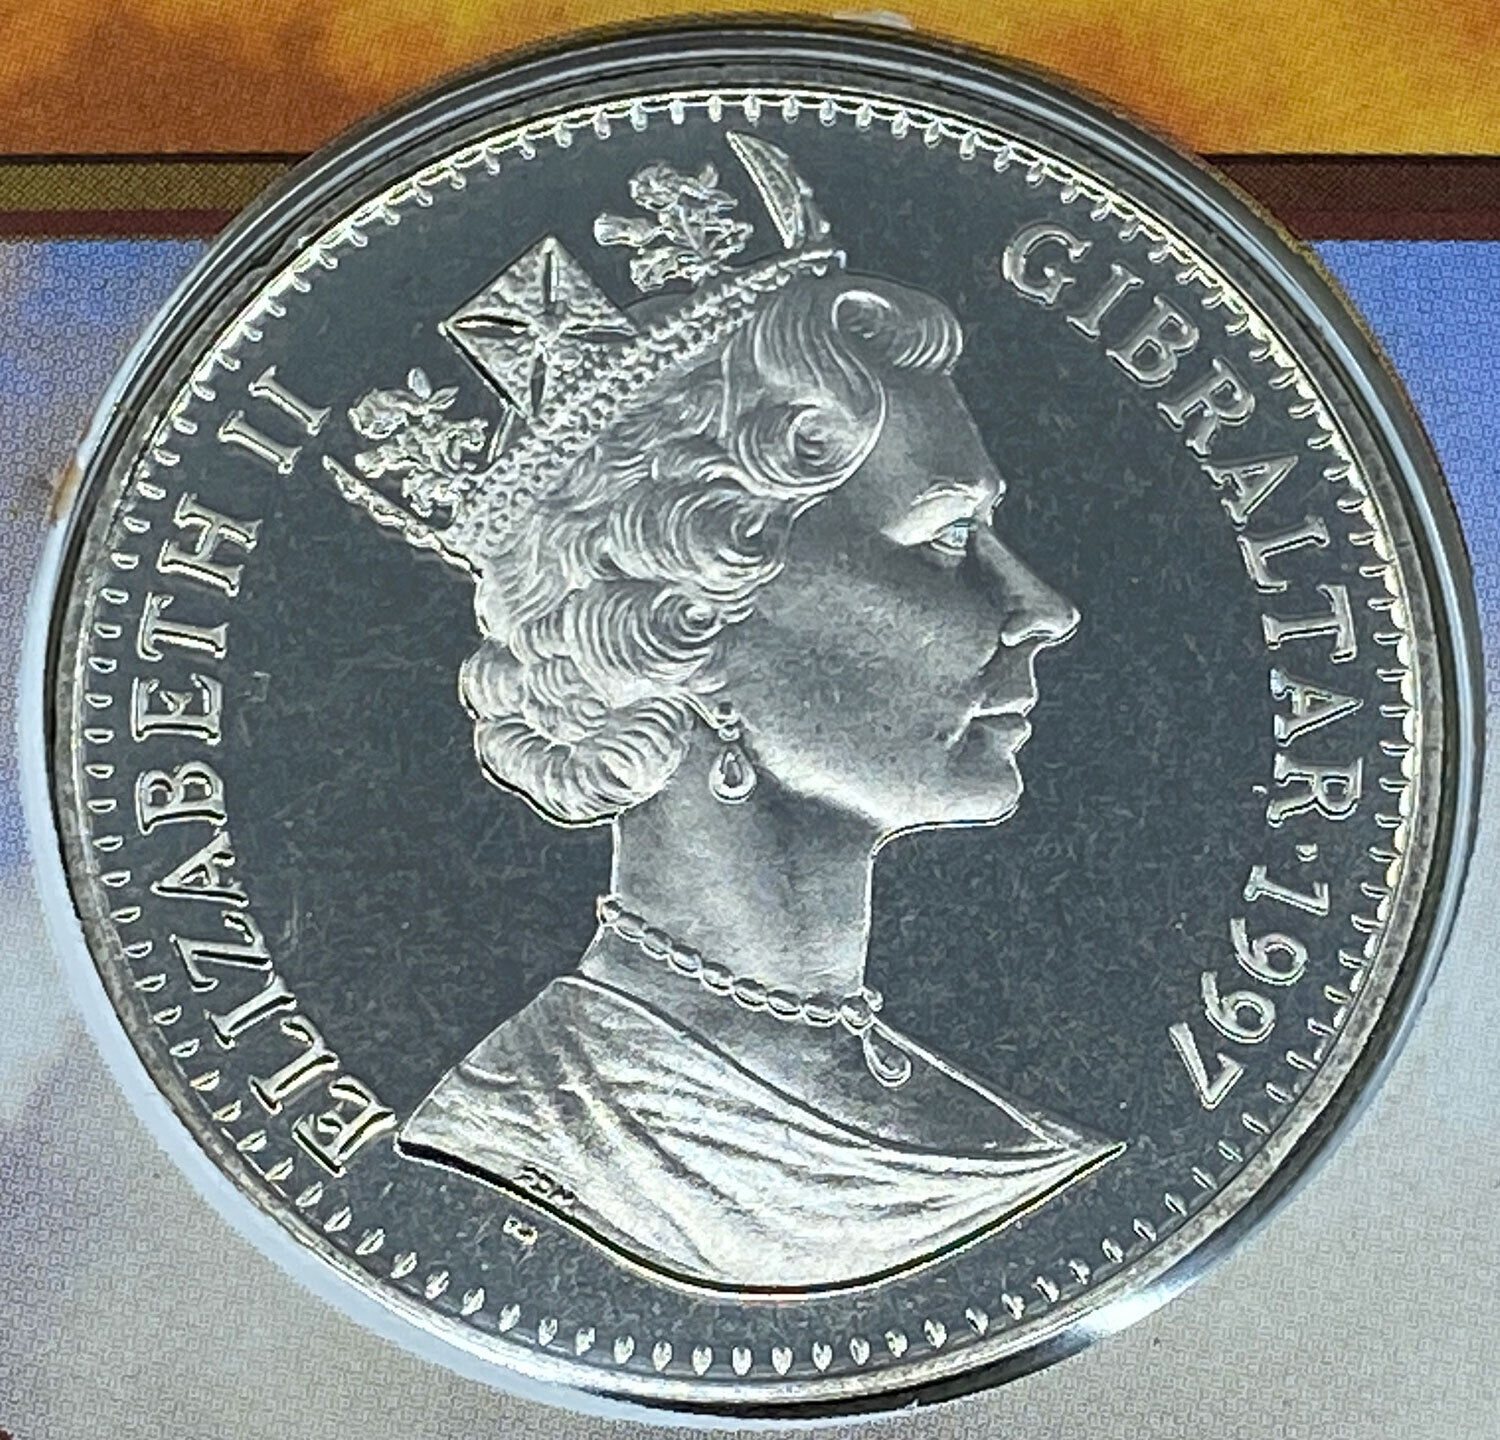 1997 GIBRALTAR Queen Elizabeth II OLD Proof Crown Coin i114445